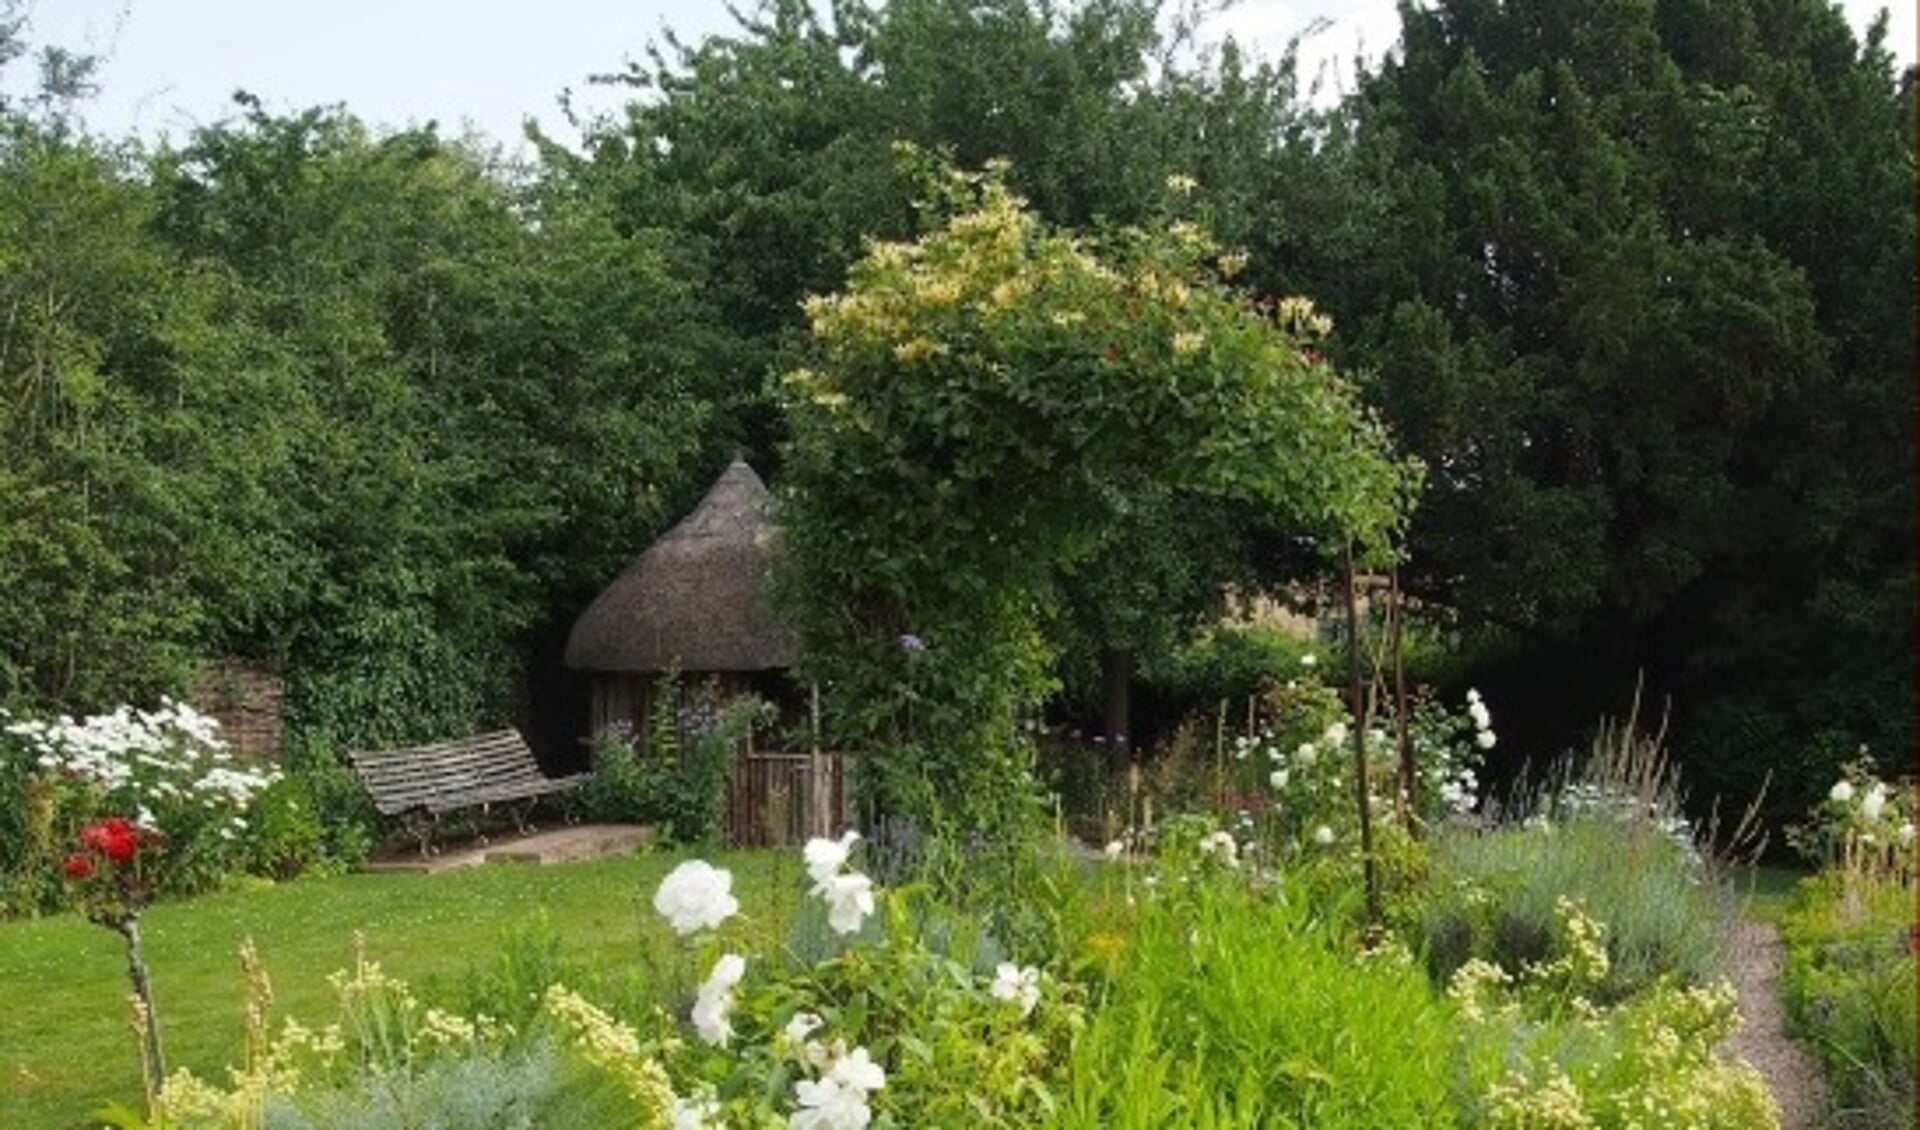 De Tuin van Elgar’s geboortehuis in Worcestershire, Engeland